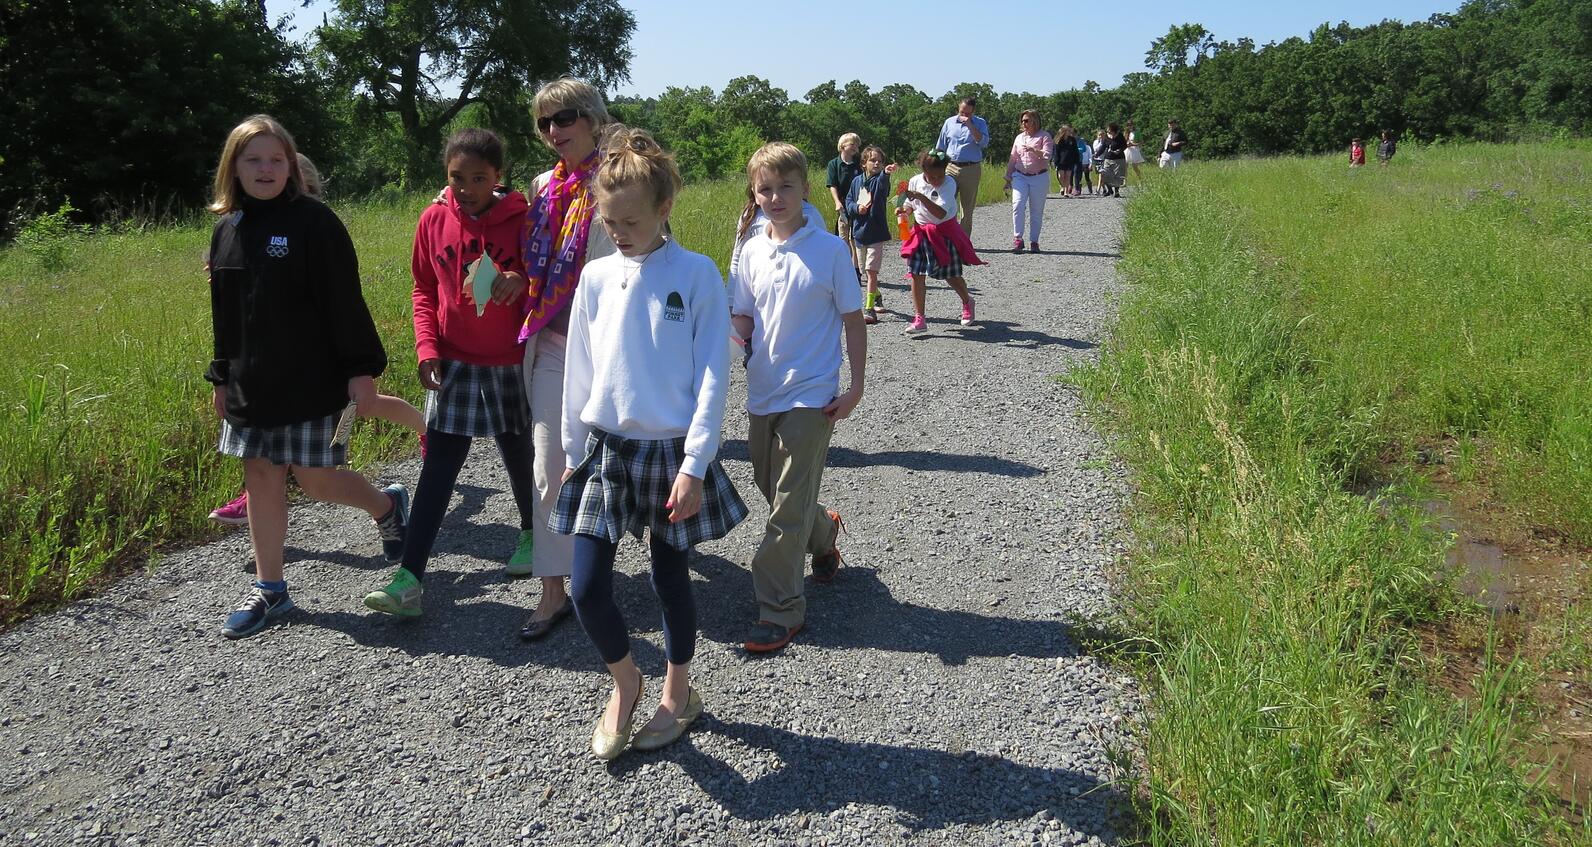 A group of school kids and teachers walk along a gravel path carved through tall grass.